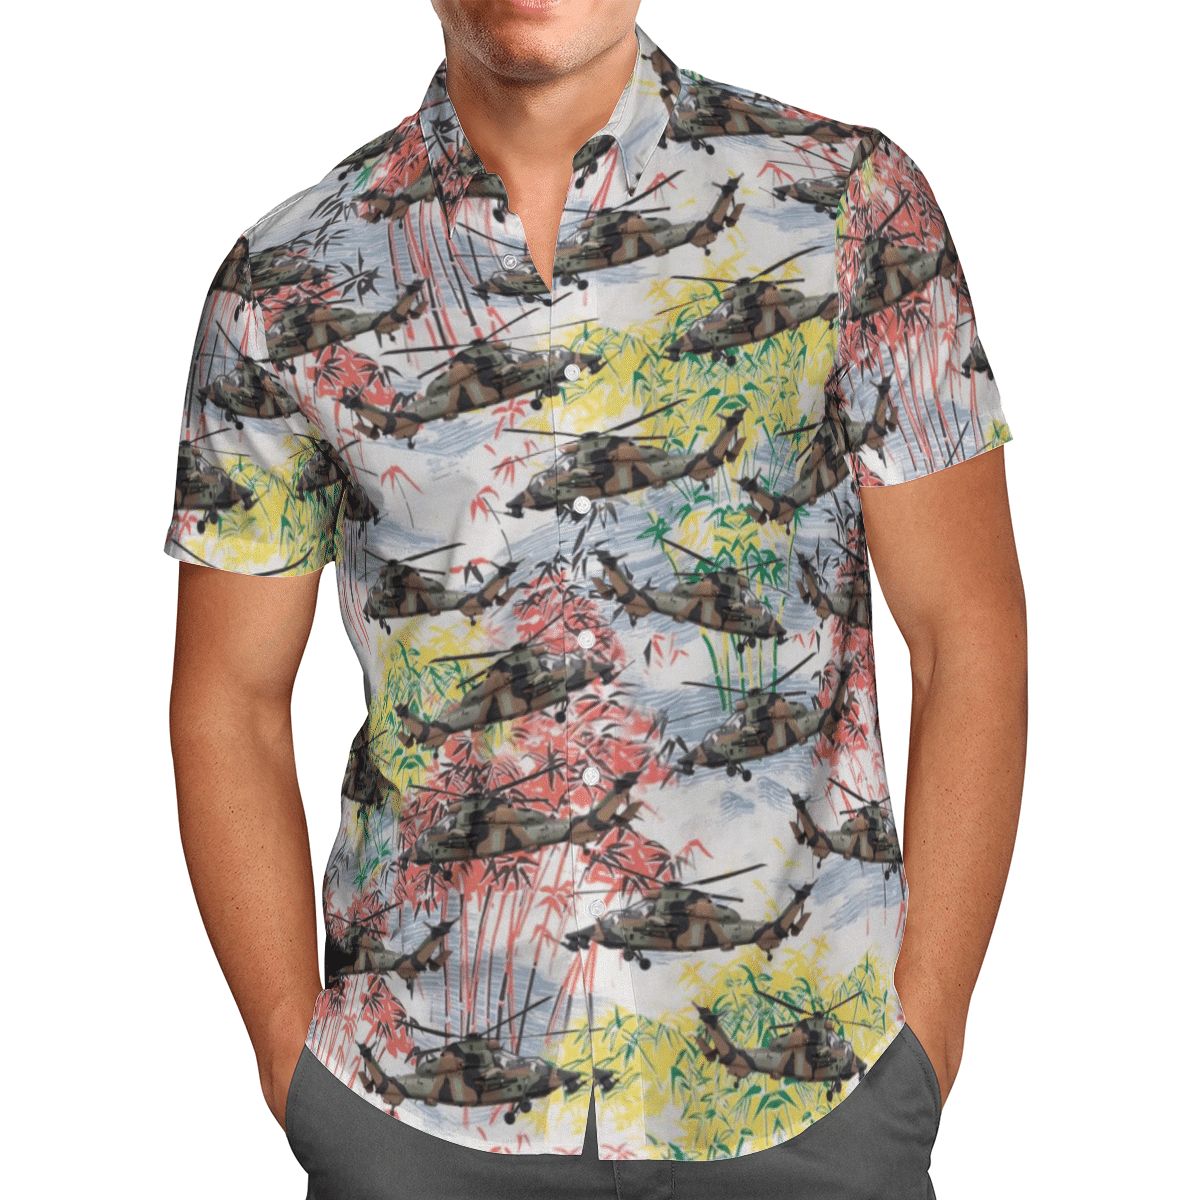 Grab a pair of these shorts and Hawaiian shirt and enjoy your next beach vacation 5